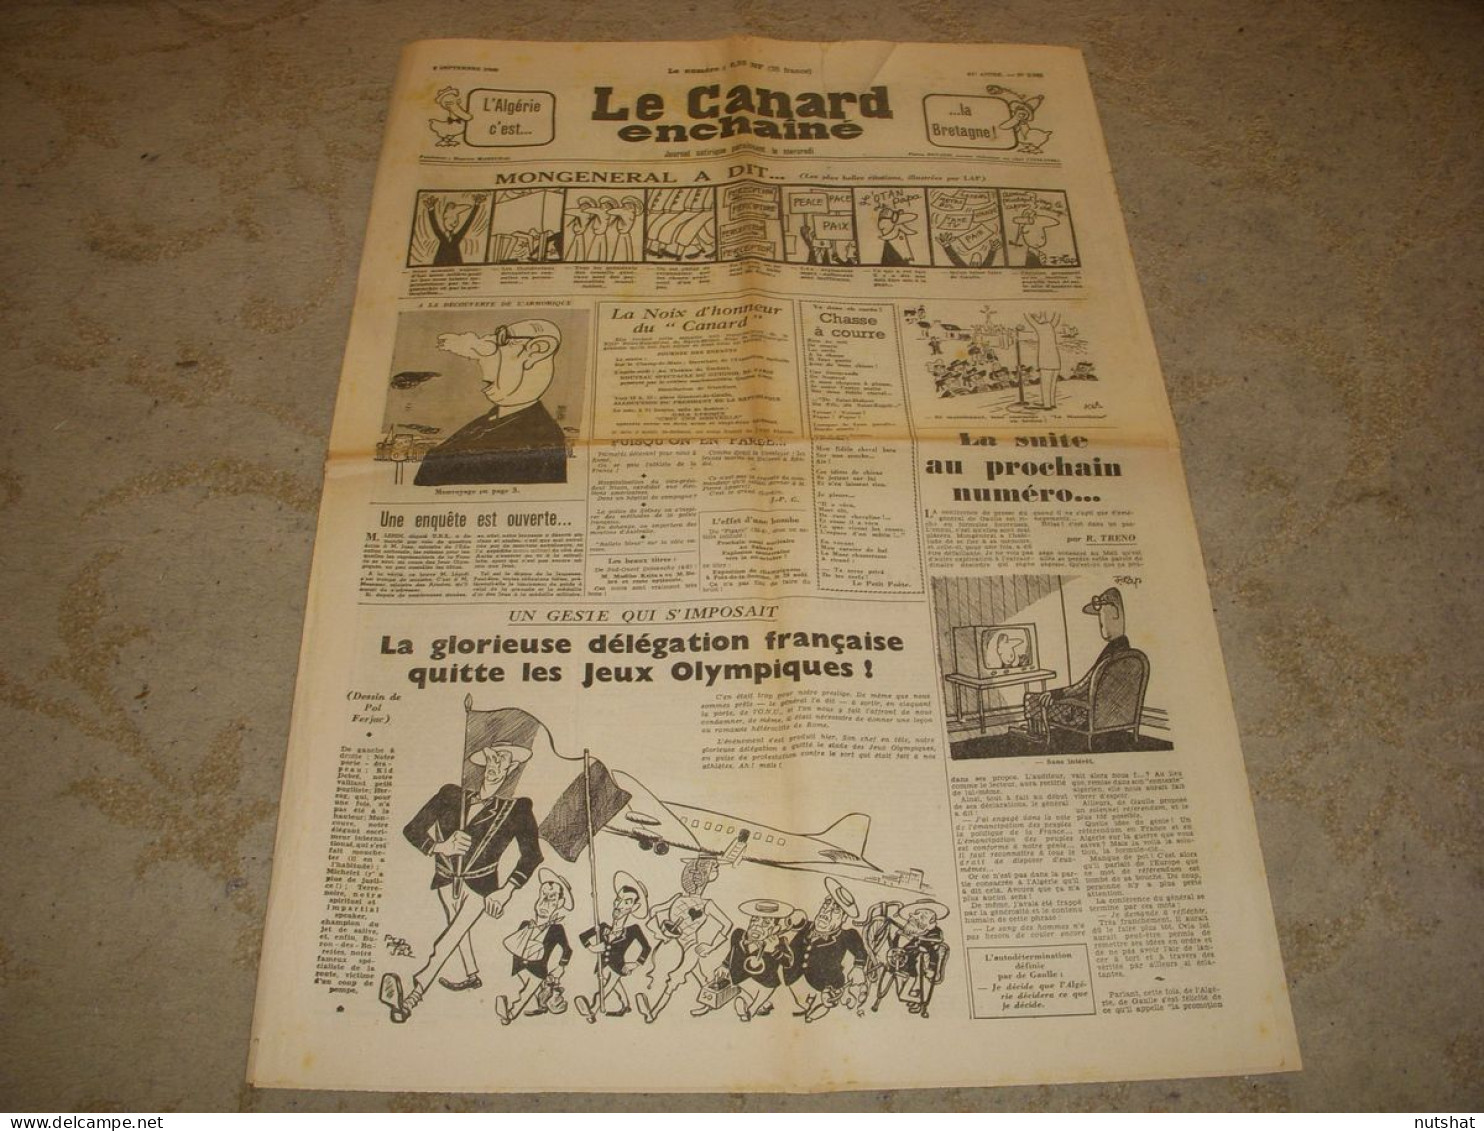 CANARD ENCHAINE 2081 07.09.1960 Jean NOHAIN Jean RIEUX Edna O'BRIEN L'OPUS DEI - Politik